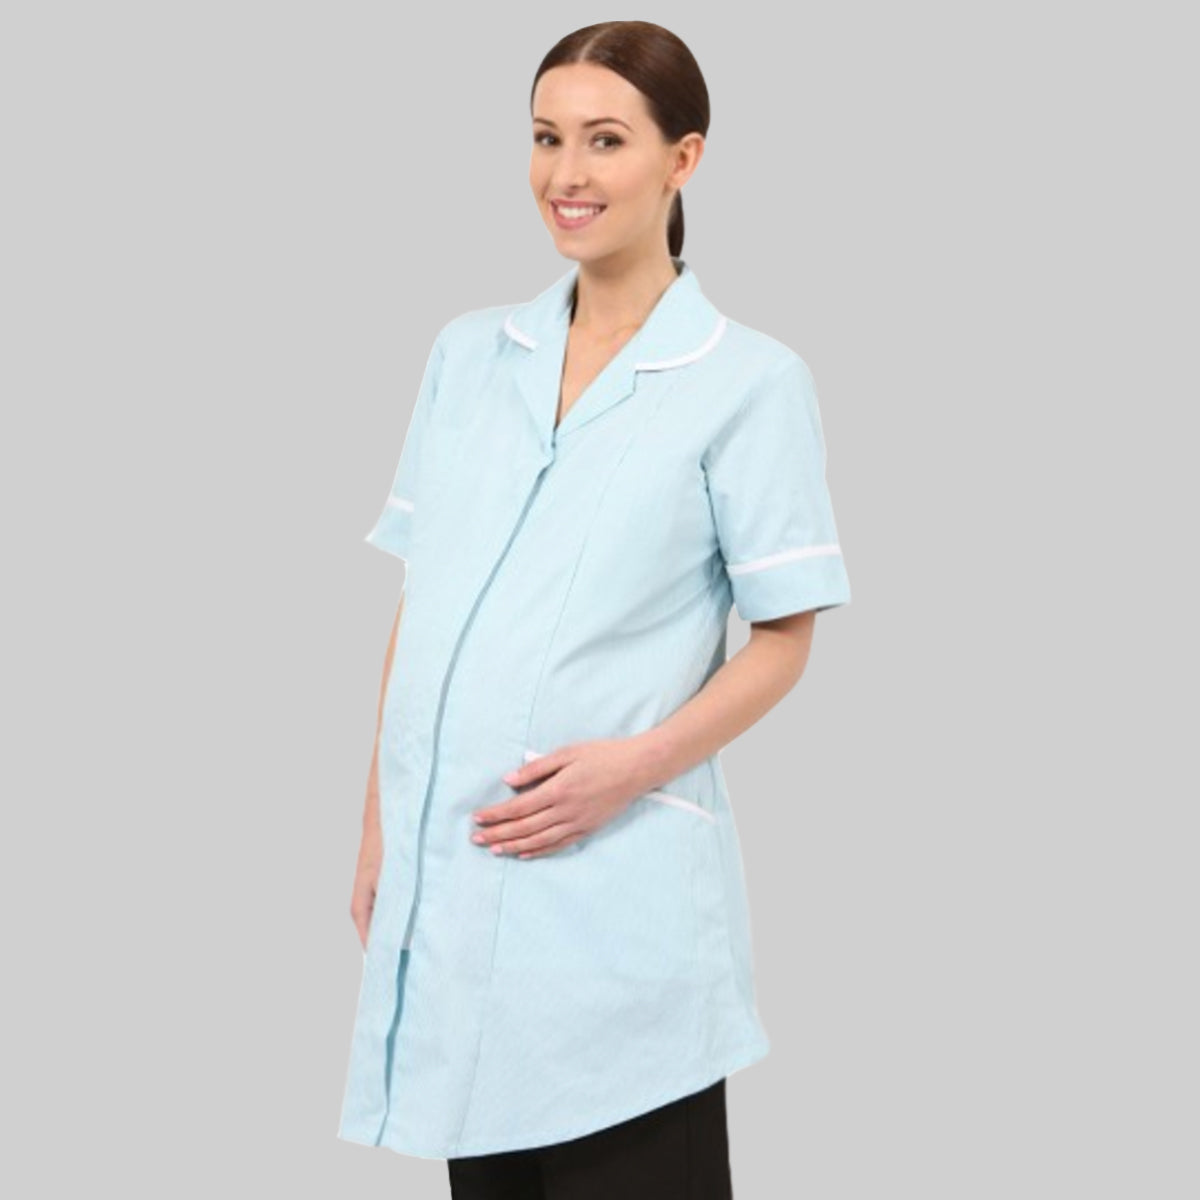 Healthcare Maternity Uniforms